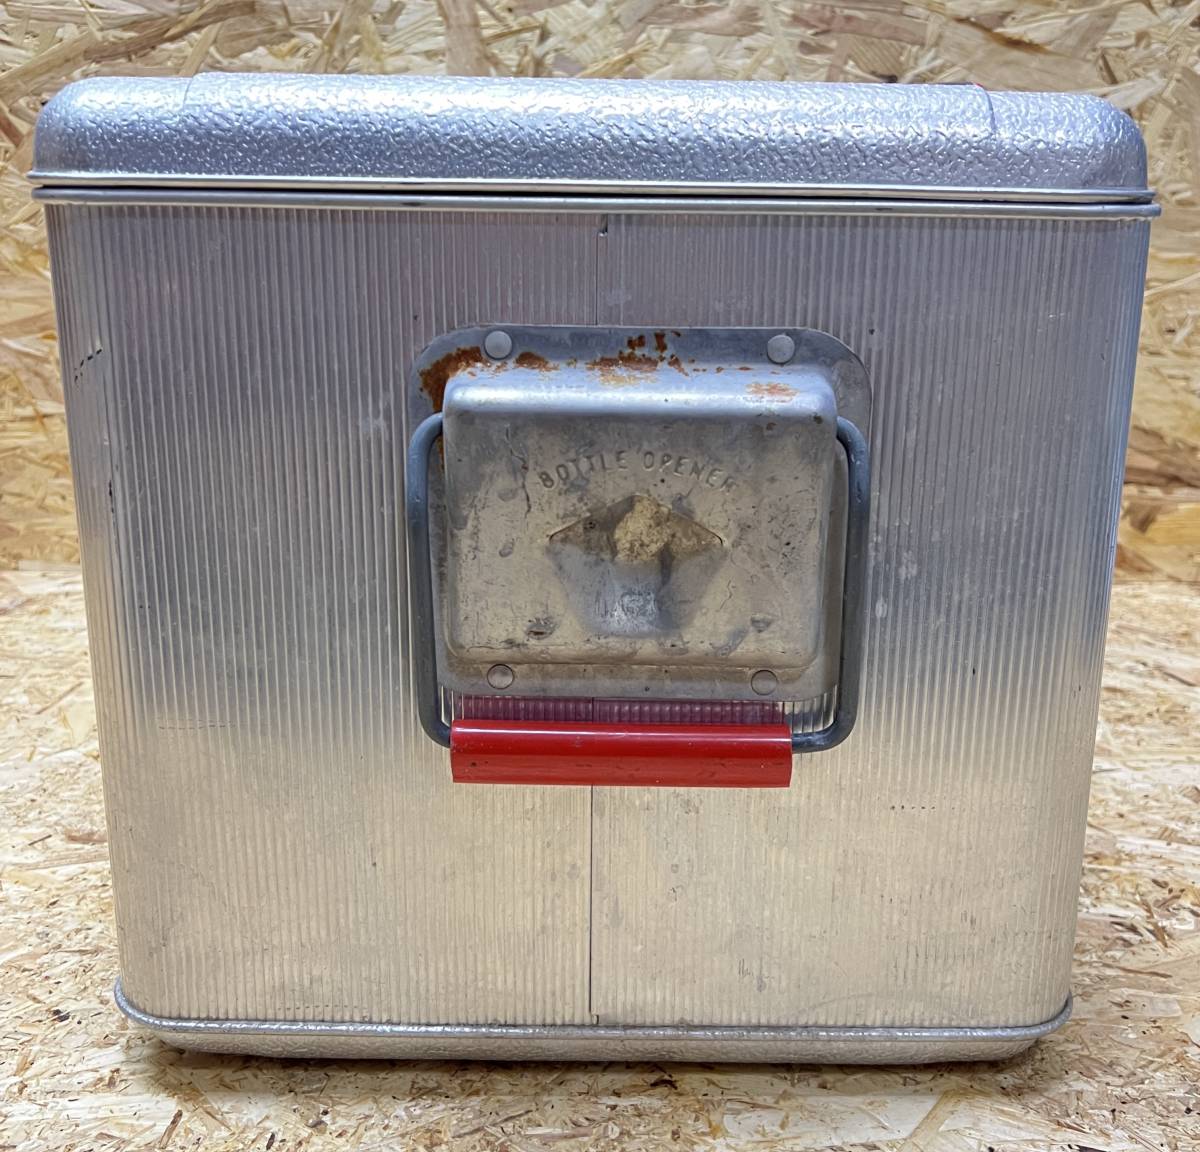  Vintage aluminium cooler-box * примерно 38 литров *Revelation*1950-60*s*USA производства * б/у товар *USA покупка 